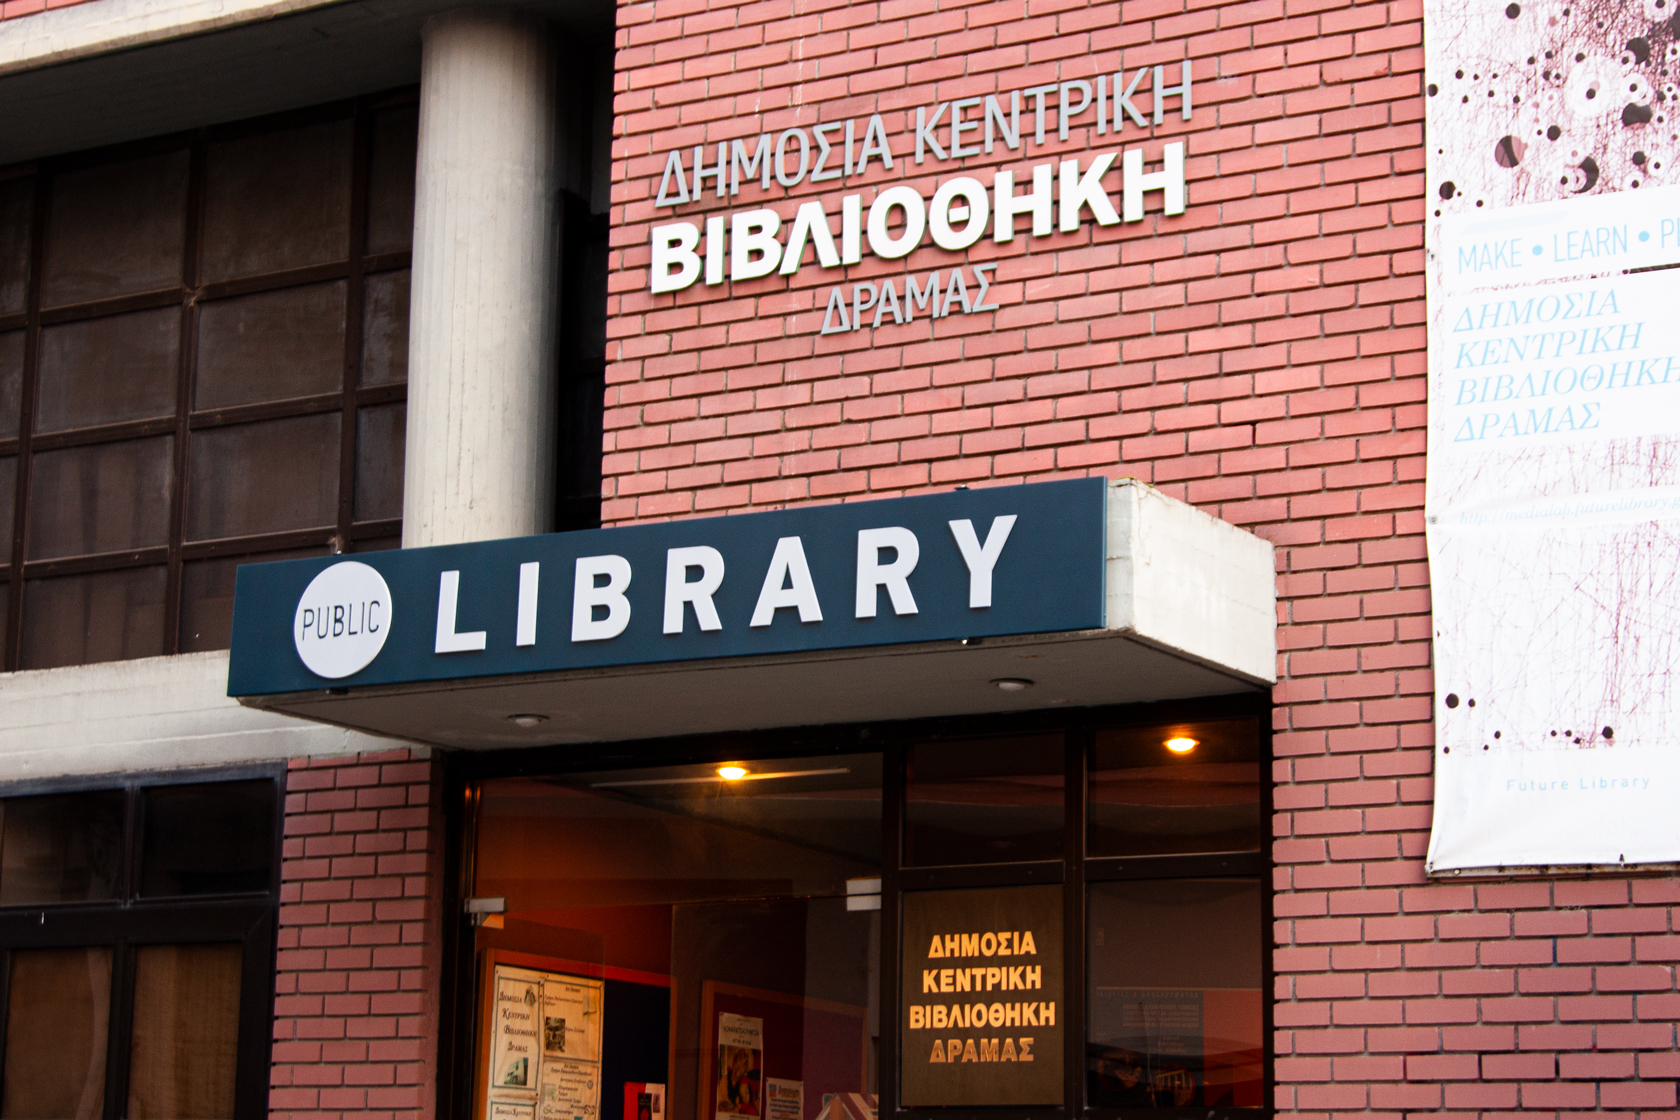 Public Library of Drama